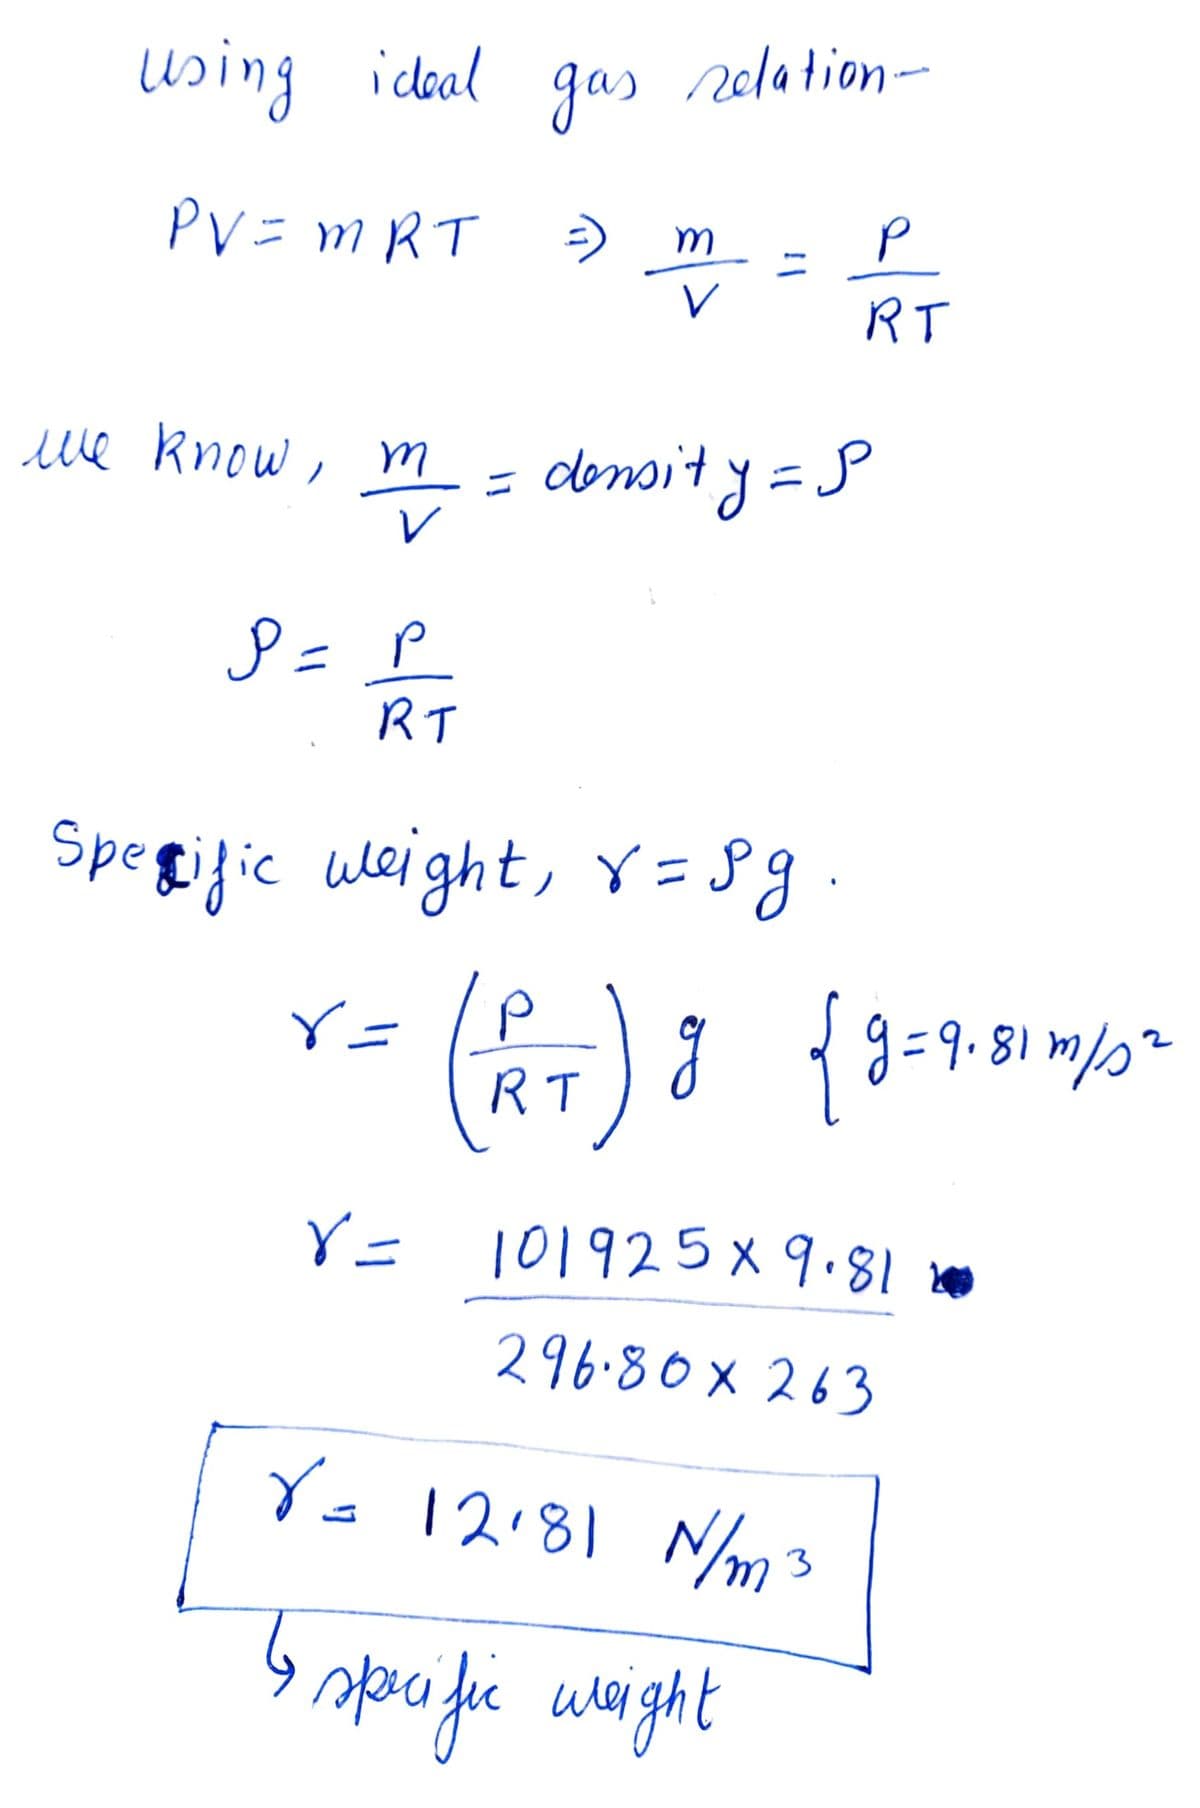 using ideal
PV = MRT
лие know, т
P = P
RT
r=
gas relation-
=> m
V
Specific weight, r=sg
V=
= density = P
P
RT
(RT) g { 9 = 9-31 1/²
g=9.81m/s²
101925 x 9.81
296.80×263
V = 12·81 N/m3
6
specific weight